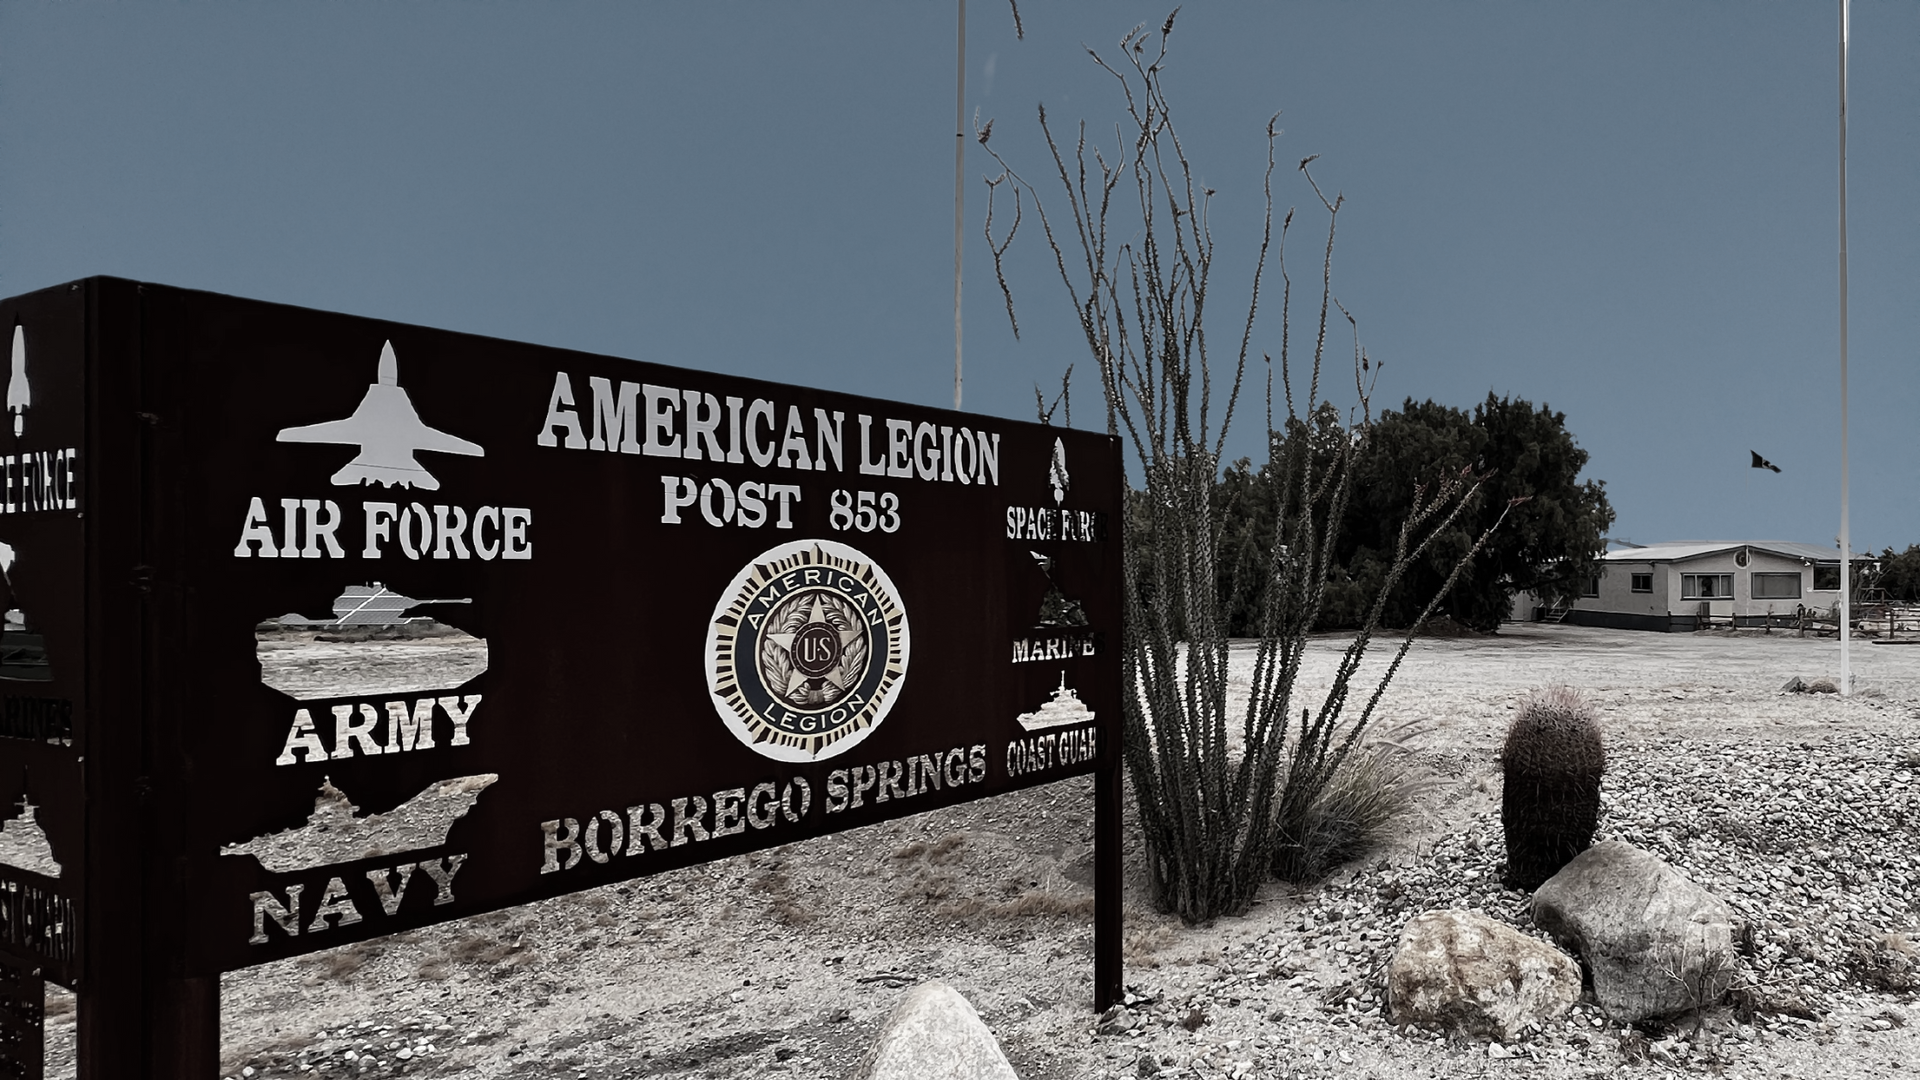 Borrego Springs: American Legion Post 853